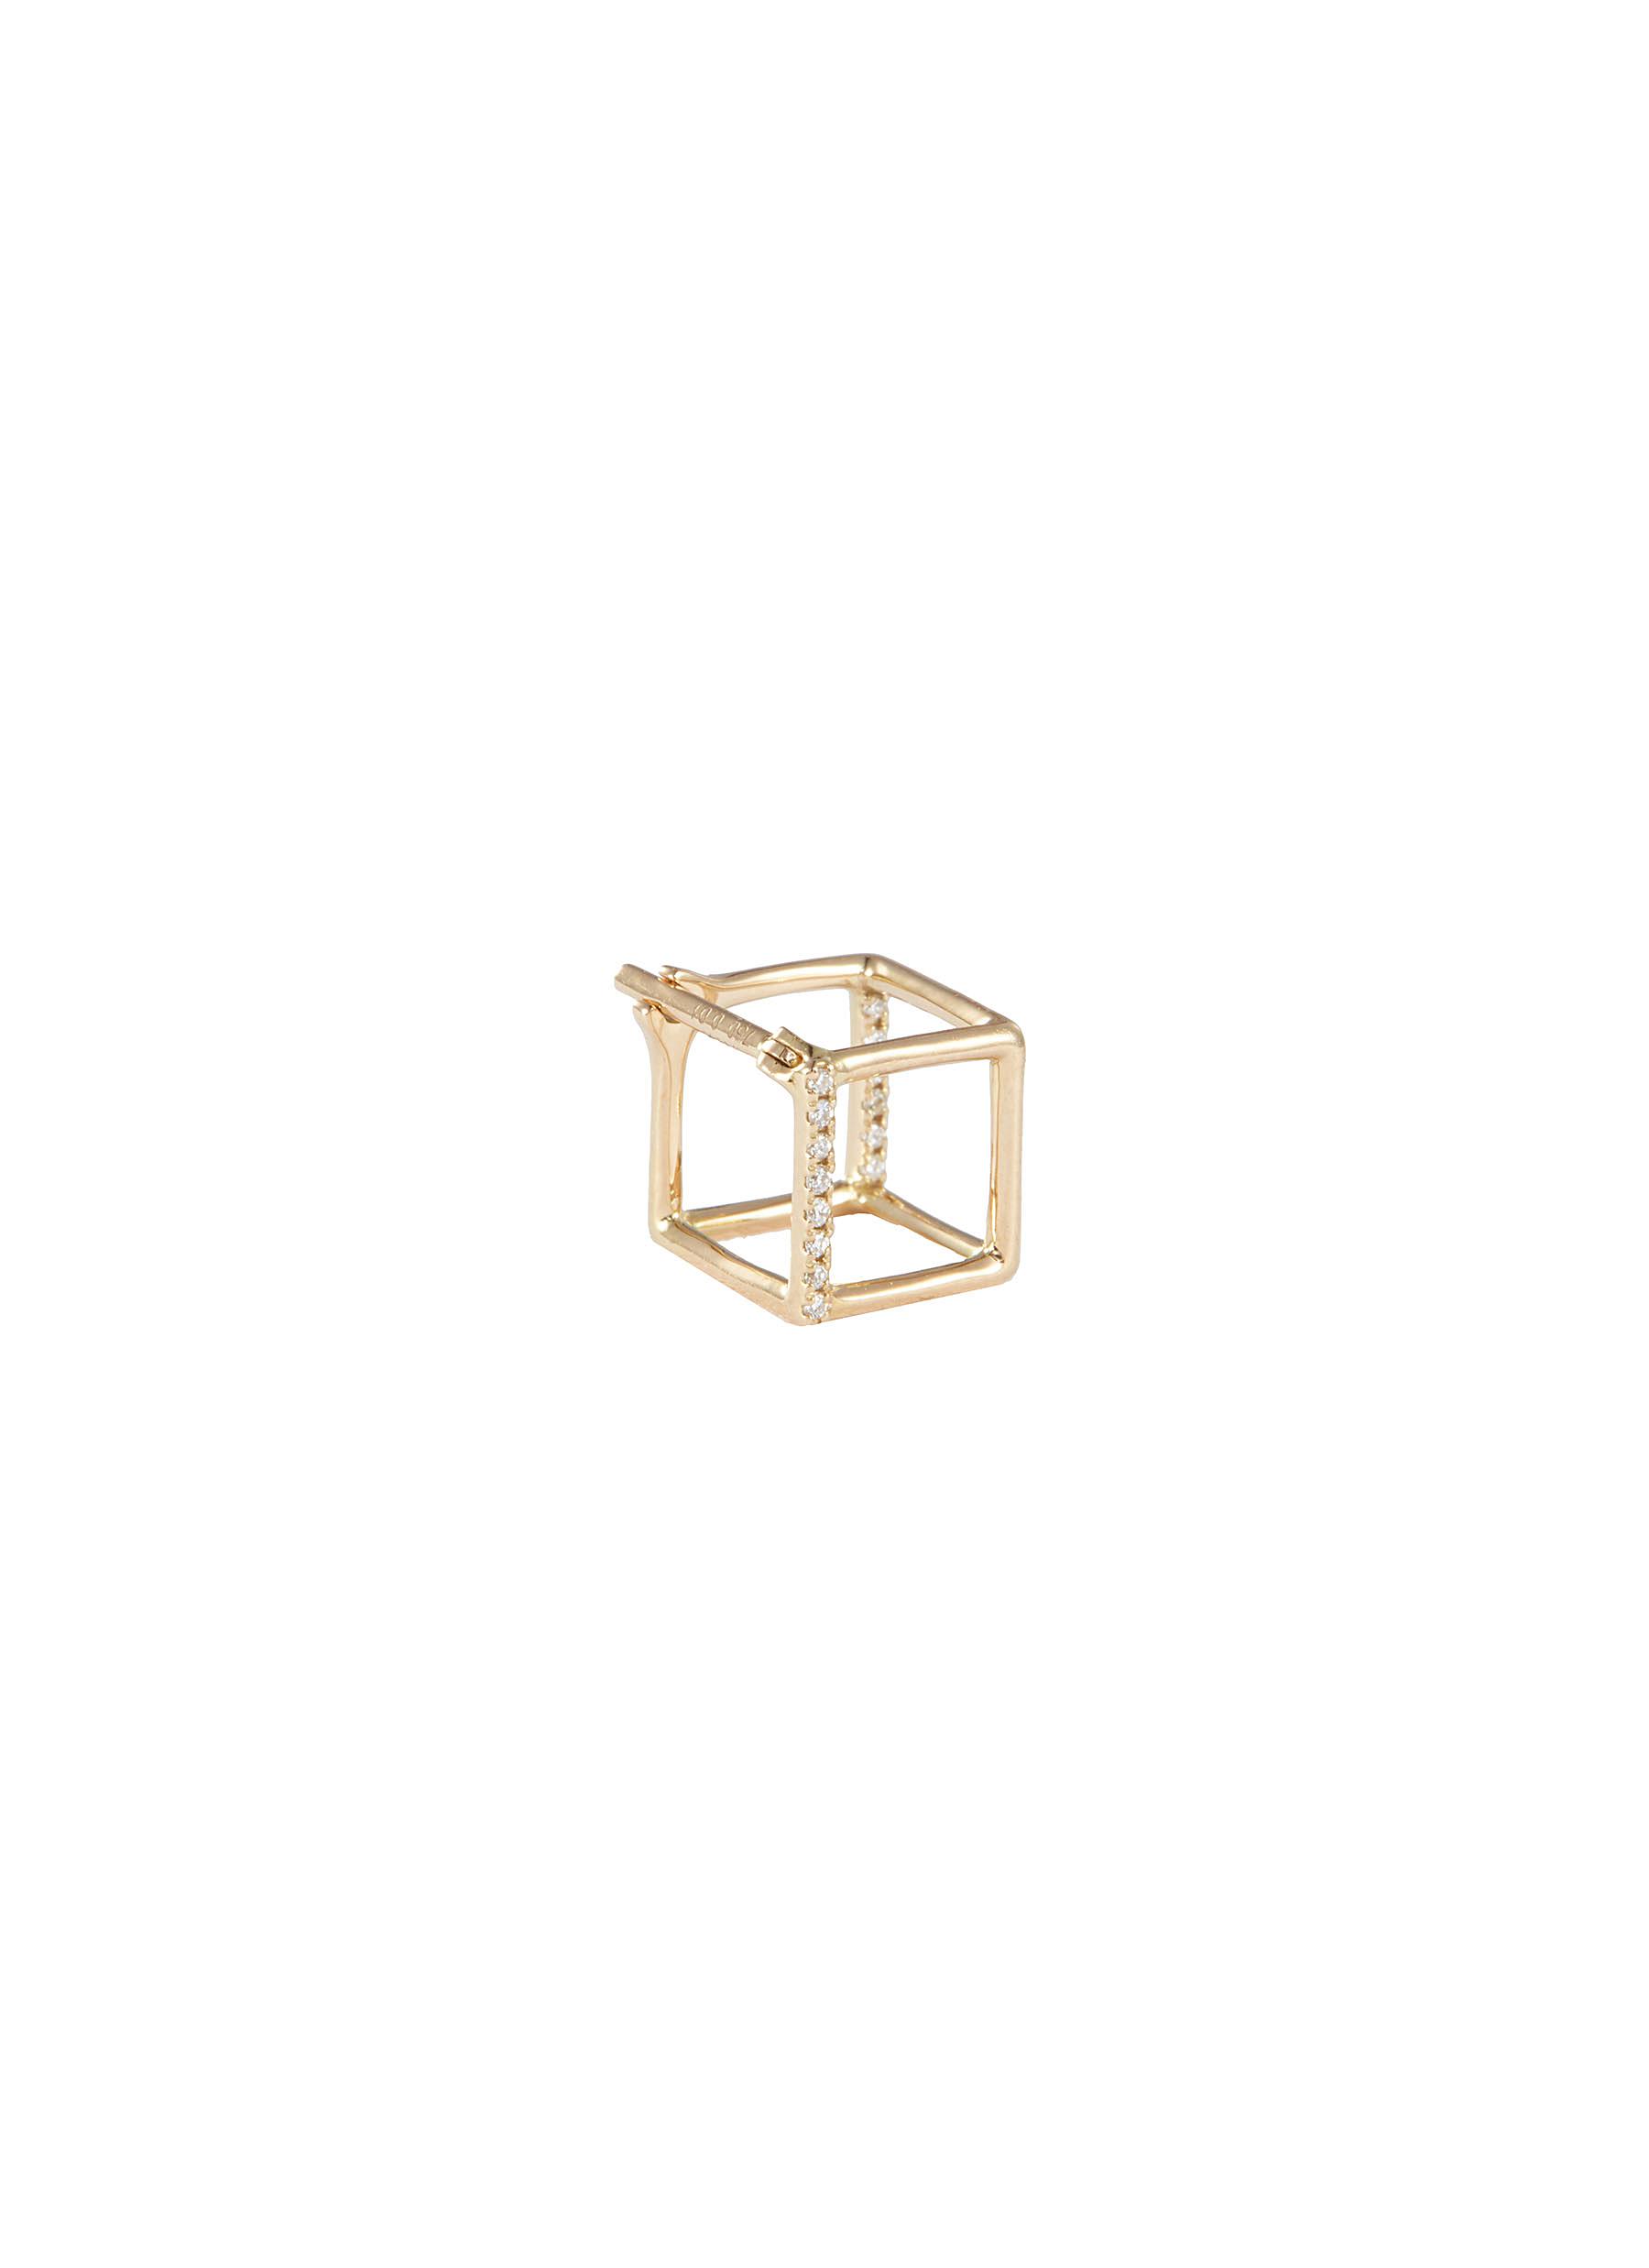 'Square' diamond 18k yellow gold cube single earring - 7mm